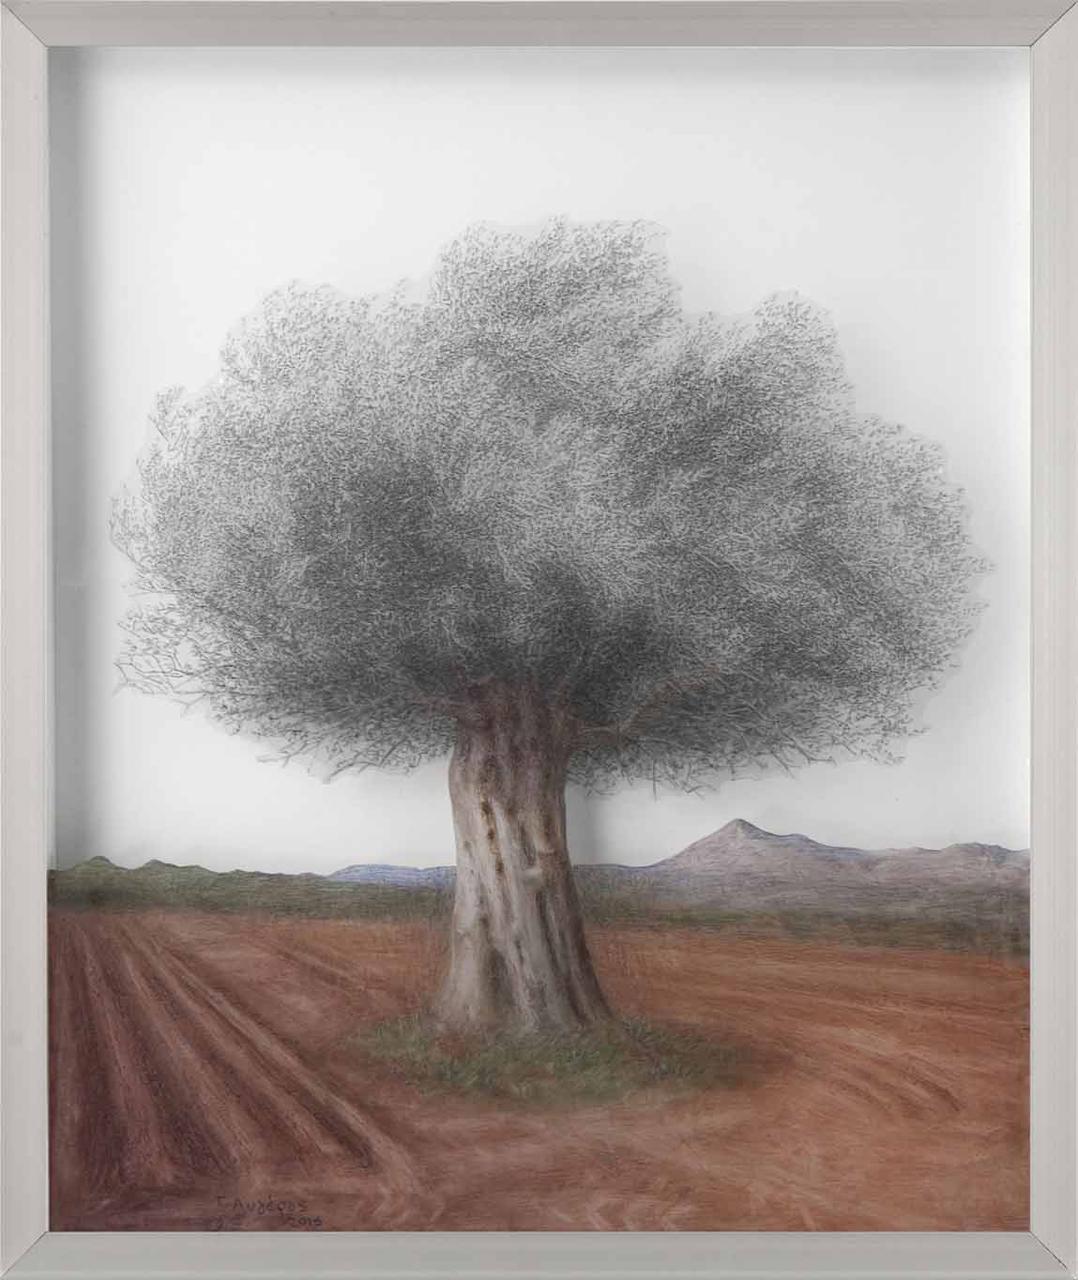 Olive Tree 1, plexiglass dust and charcoal on transparent film, 47 x  57 cm, 2015